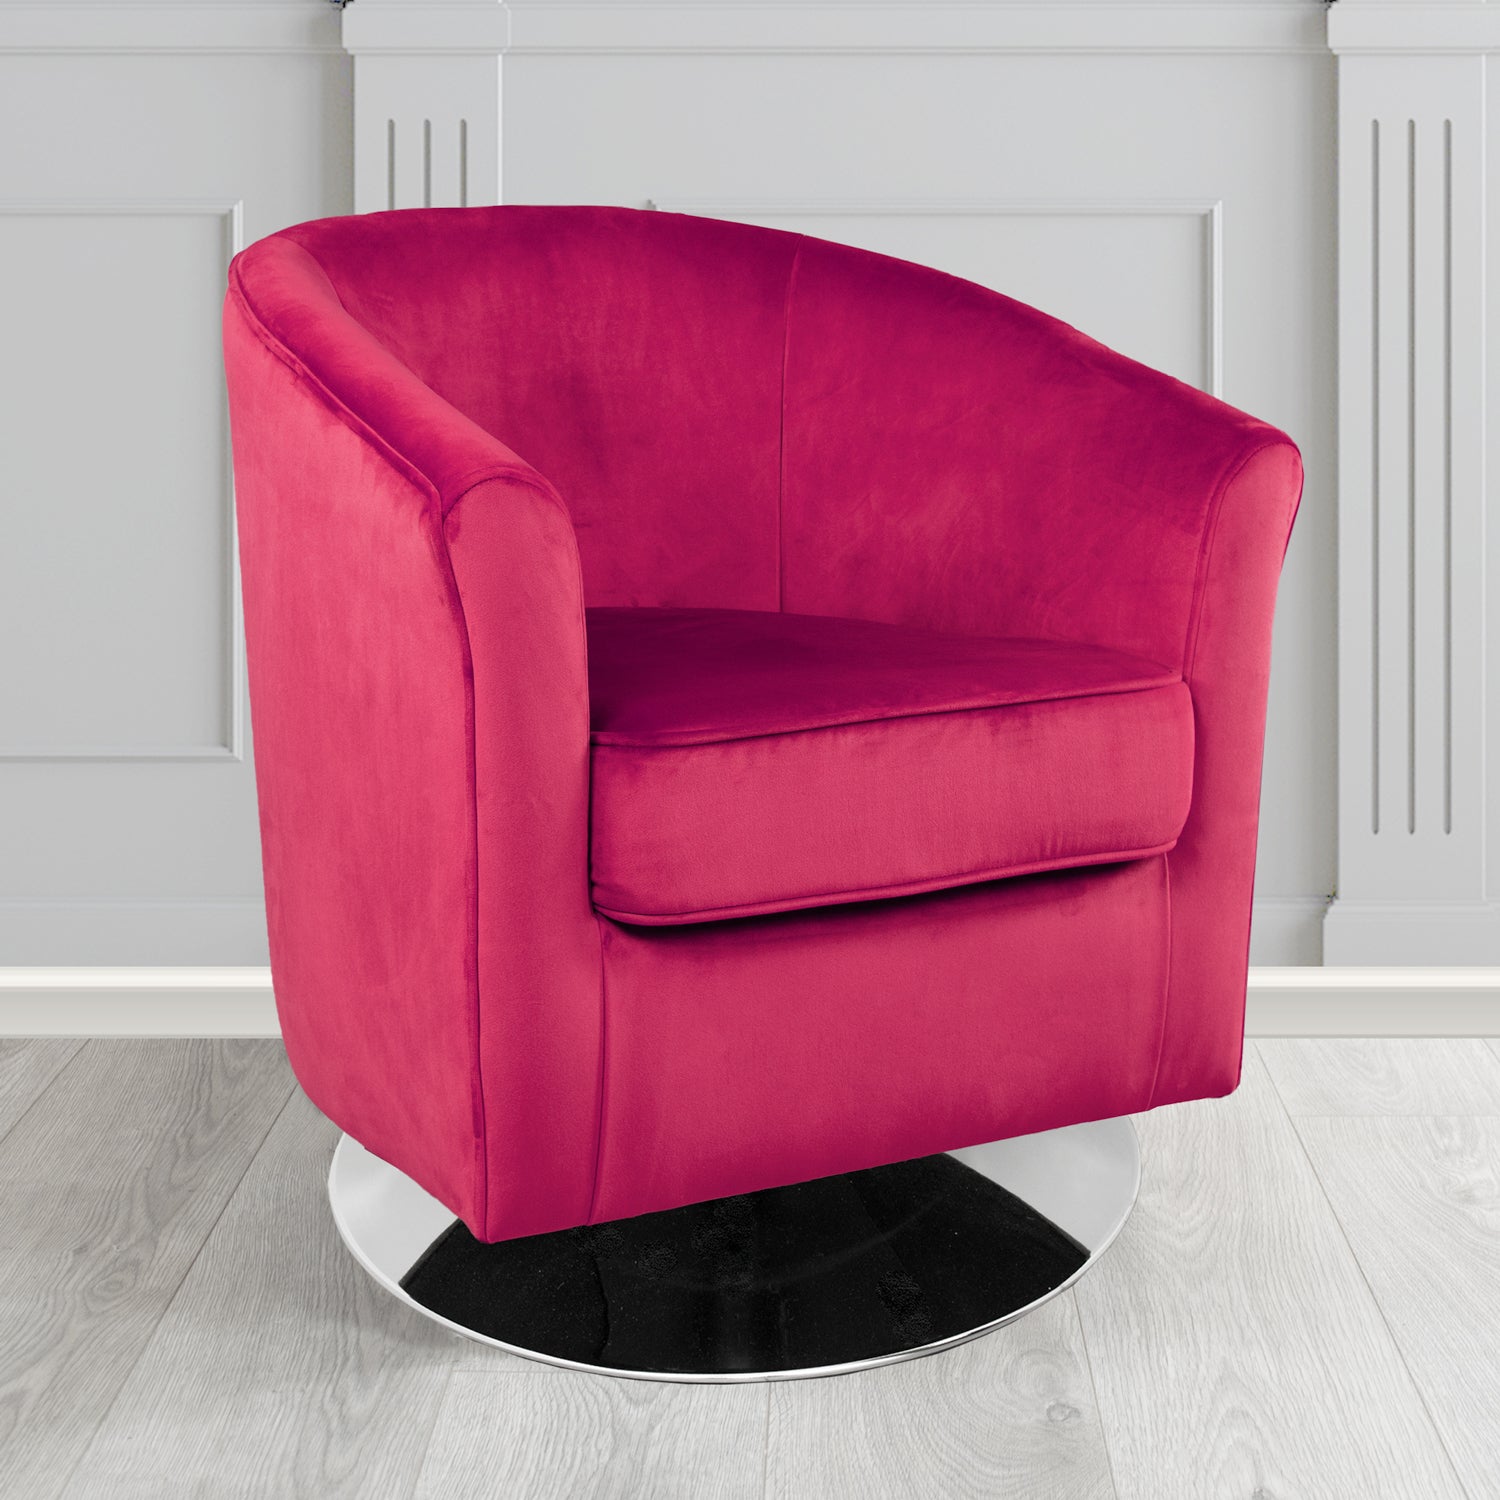 Devon Swivel Tub Chair in Monaco Boysenberry Velvet Fabric - The Tub Chair Shop